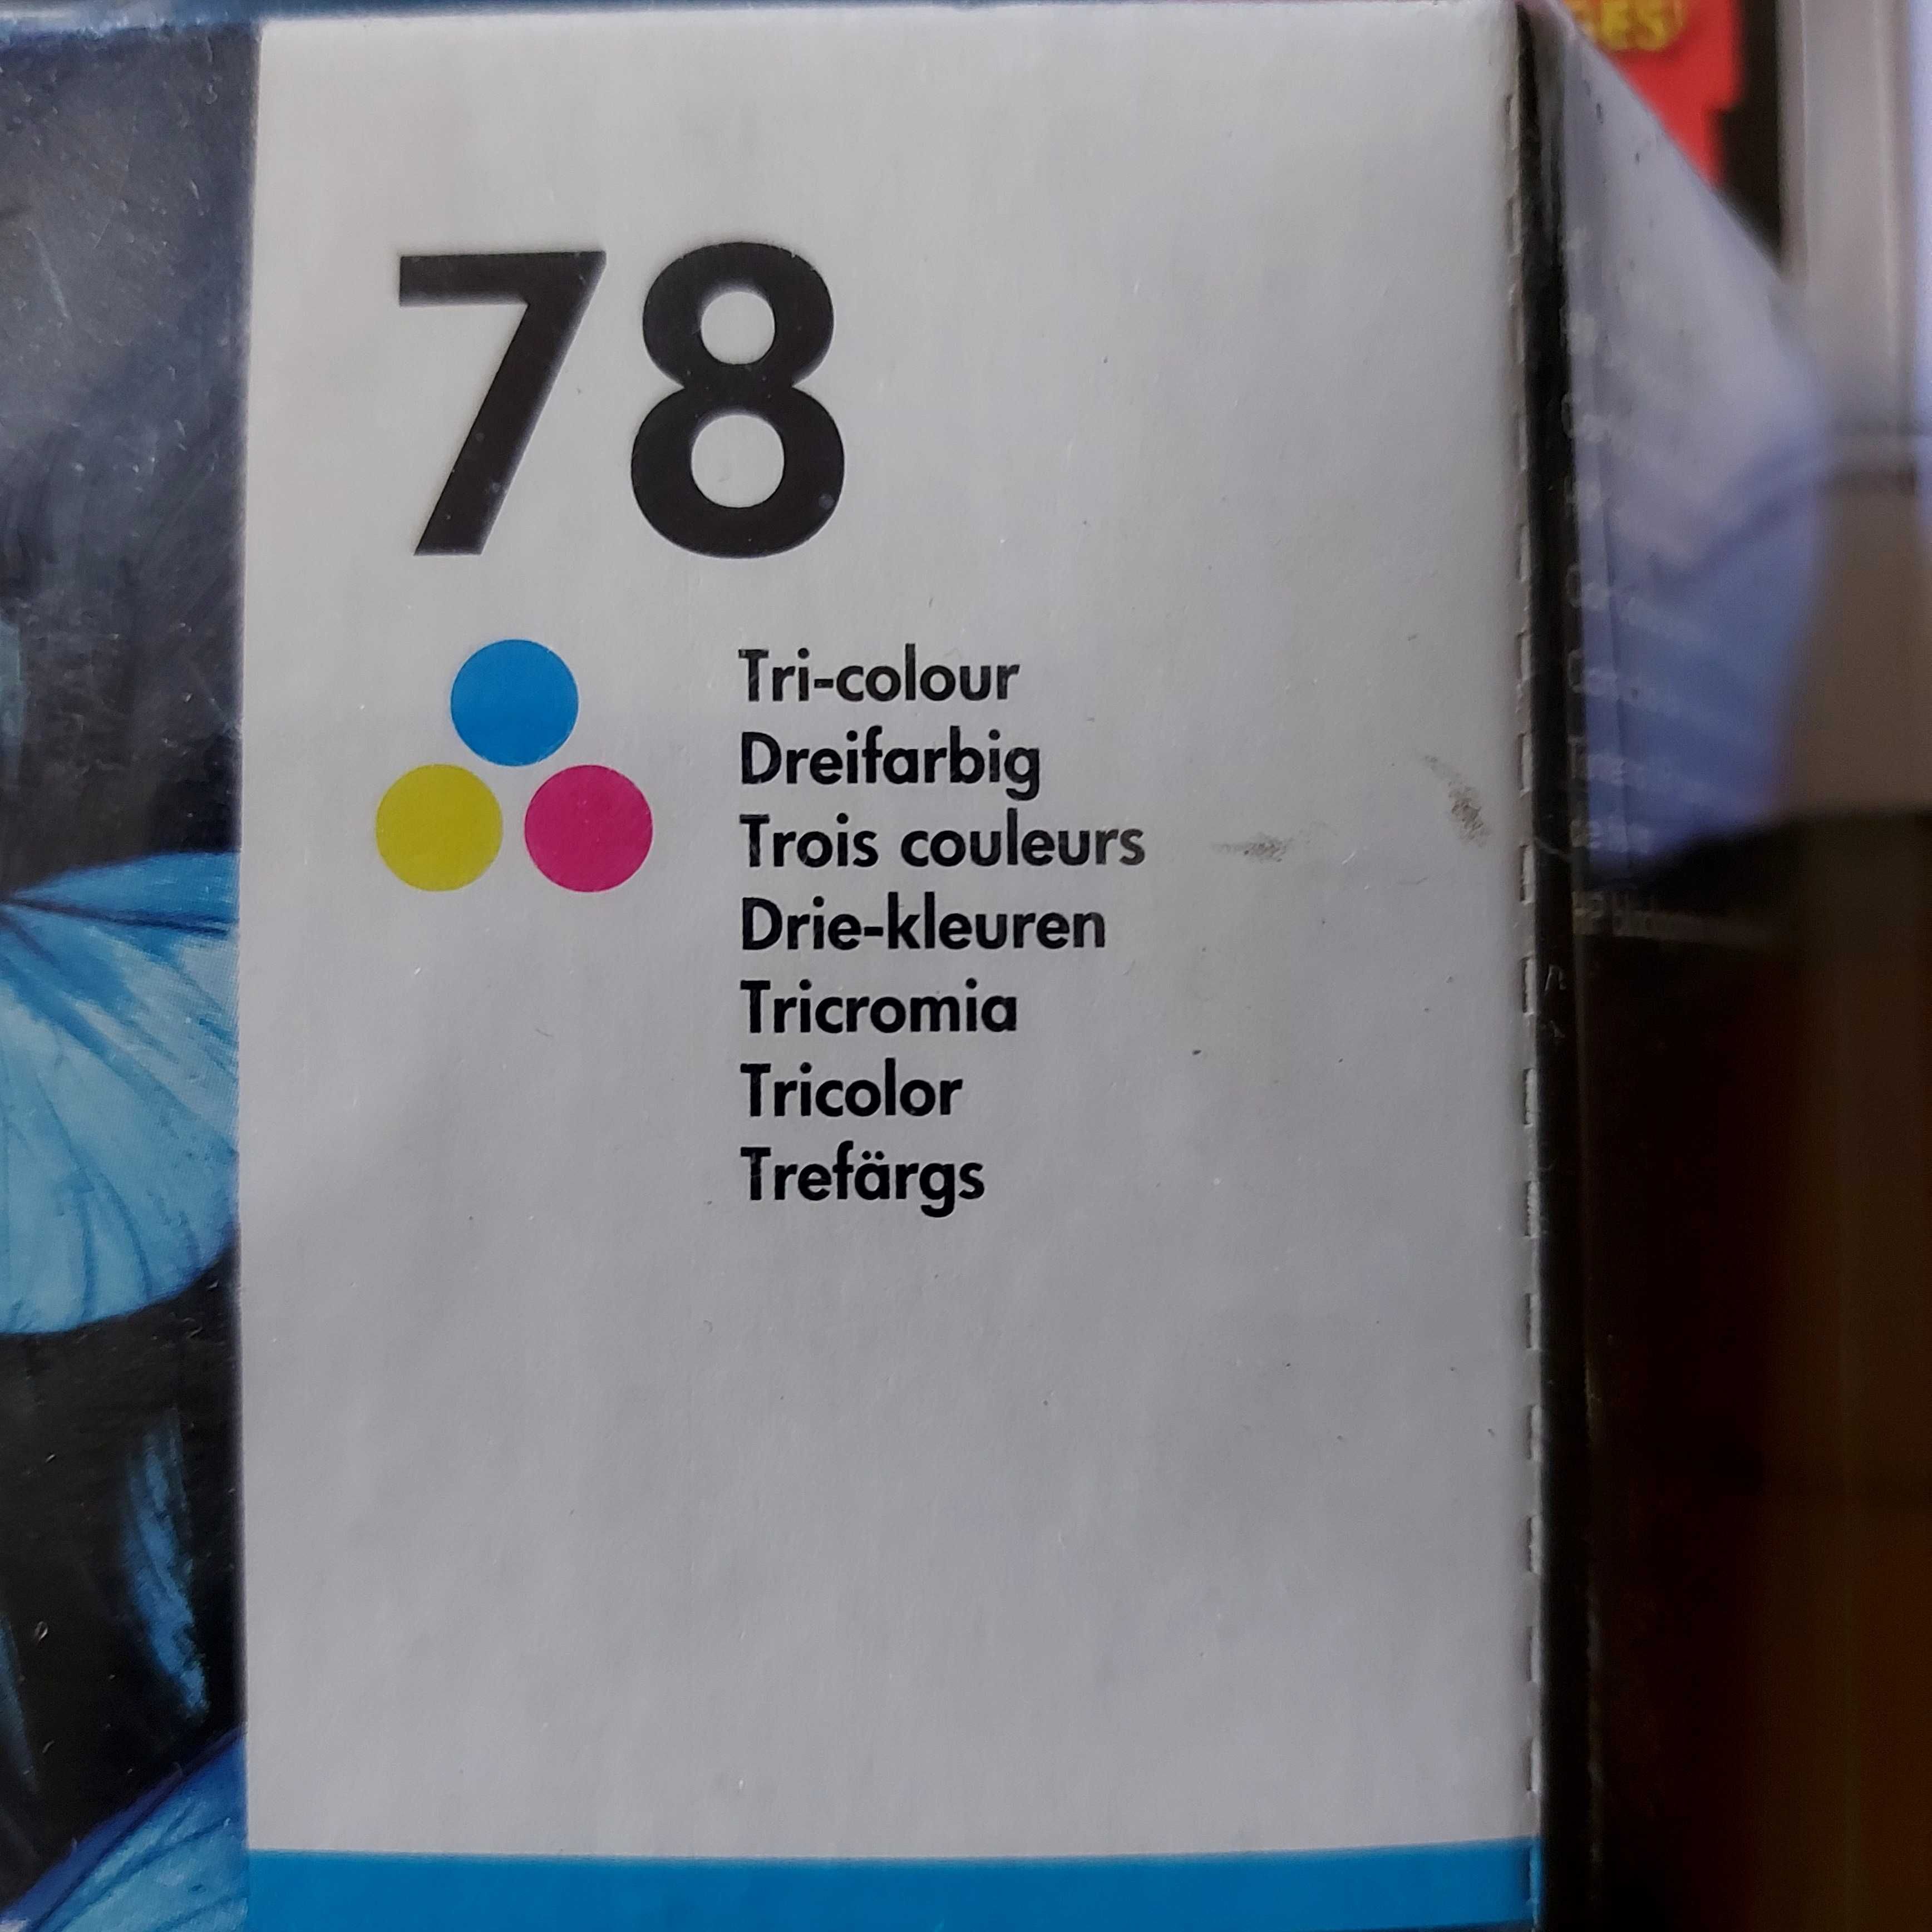 Tinteiro HP 78 tri.colour